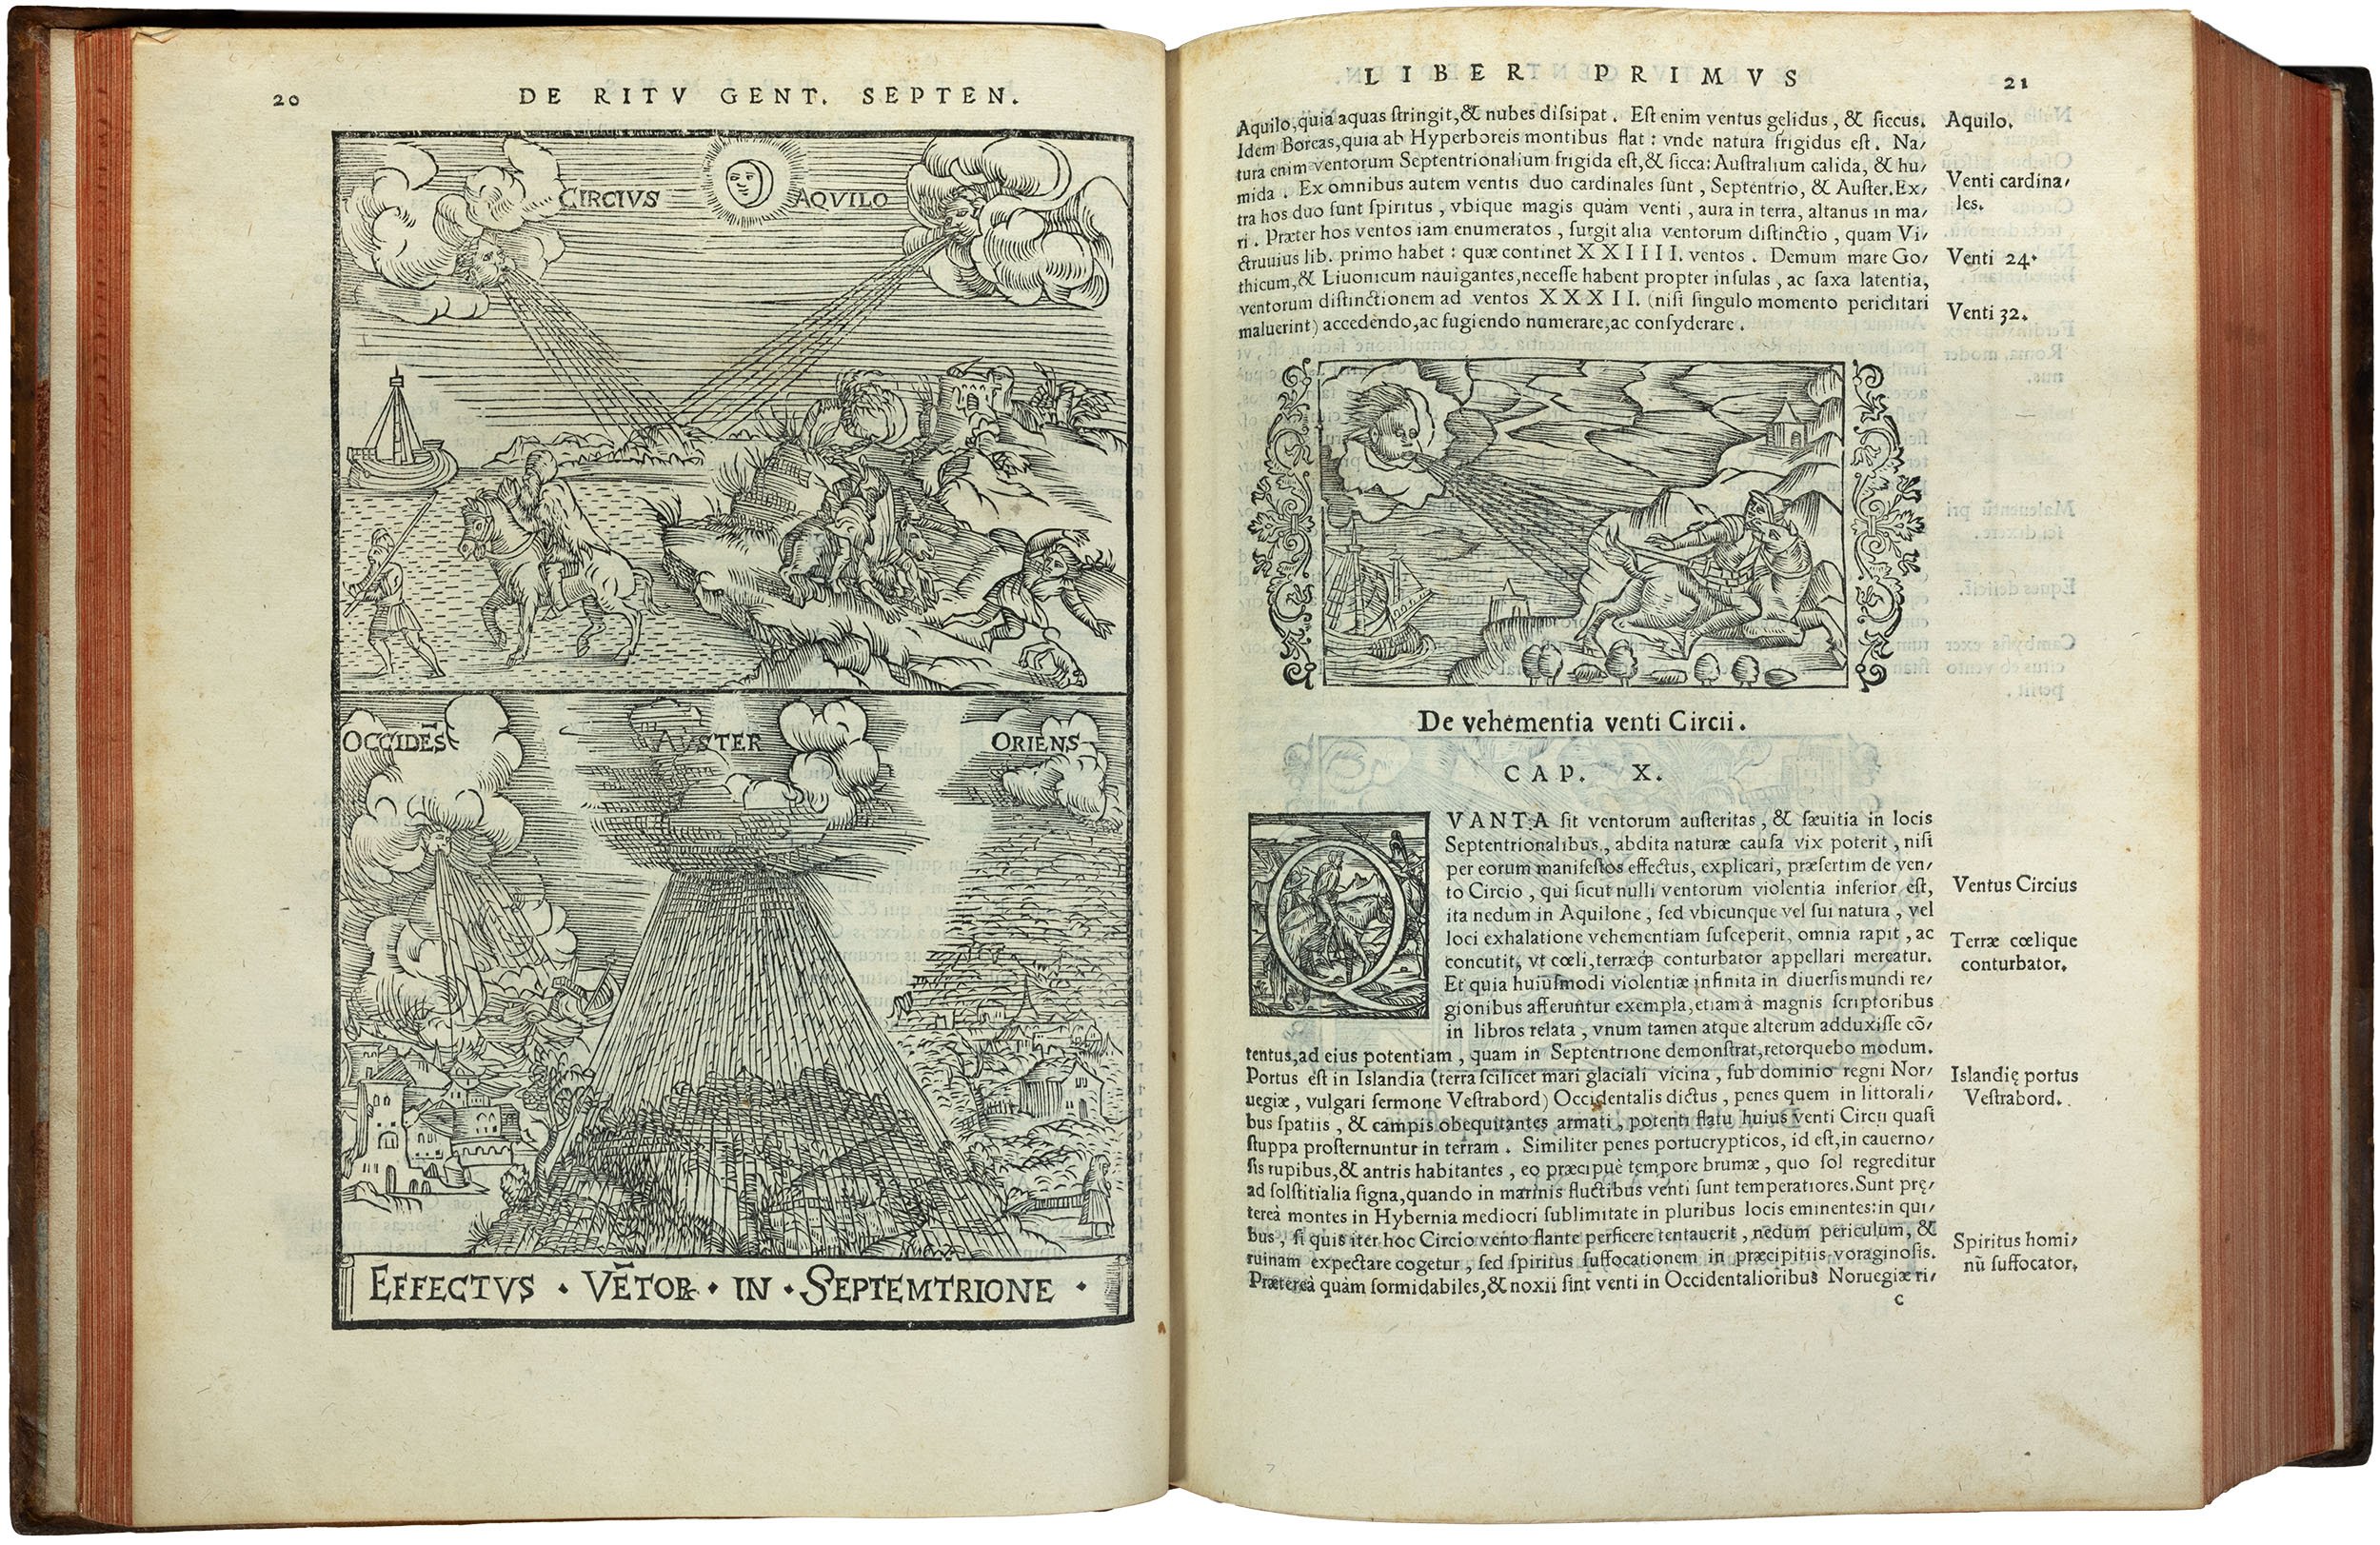 Olaus-Magnus-Historia-scandinavia-1555-first-edition-brunck-jeanson-9.jpg